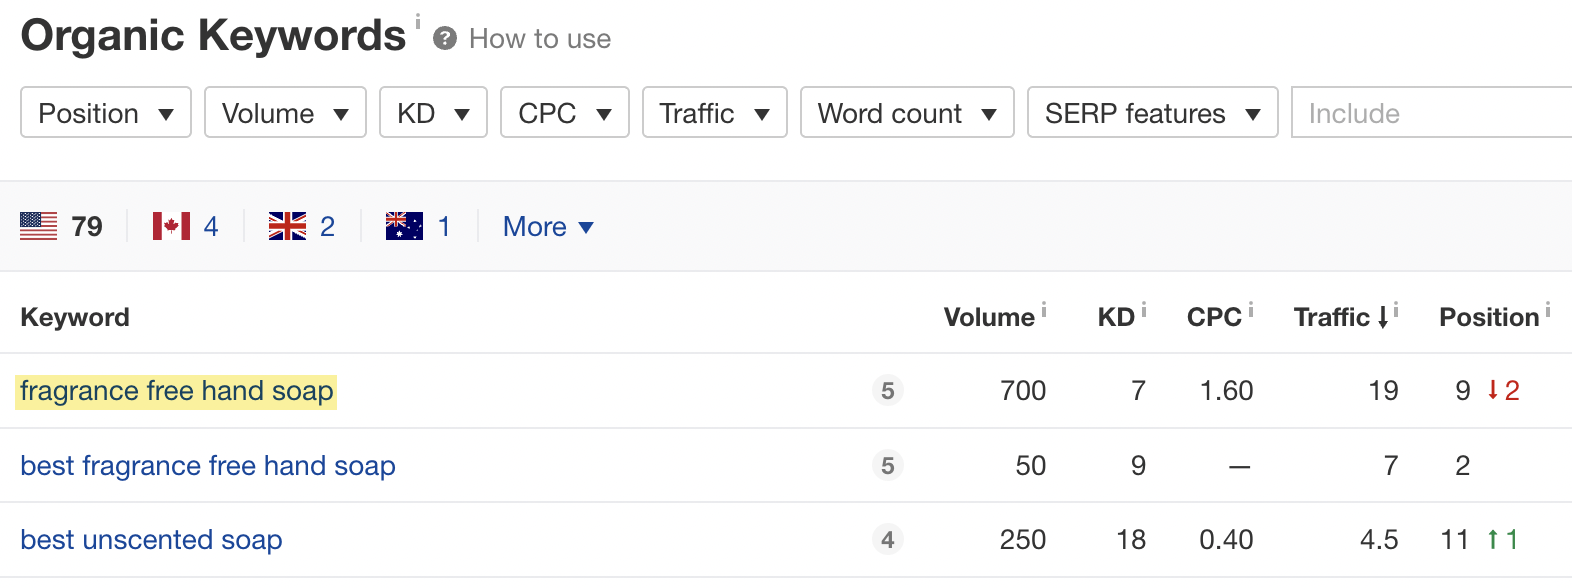 List of keywords with corresponding data like Volume, KD, etc